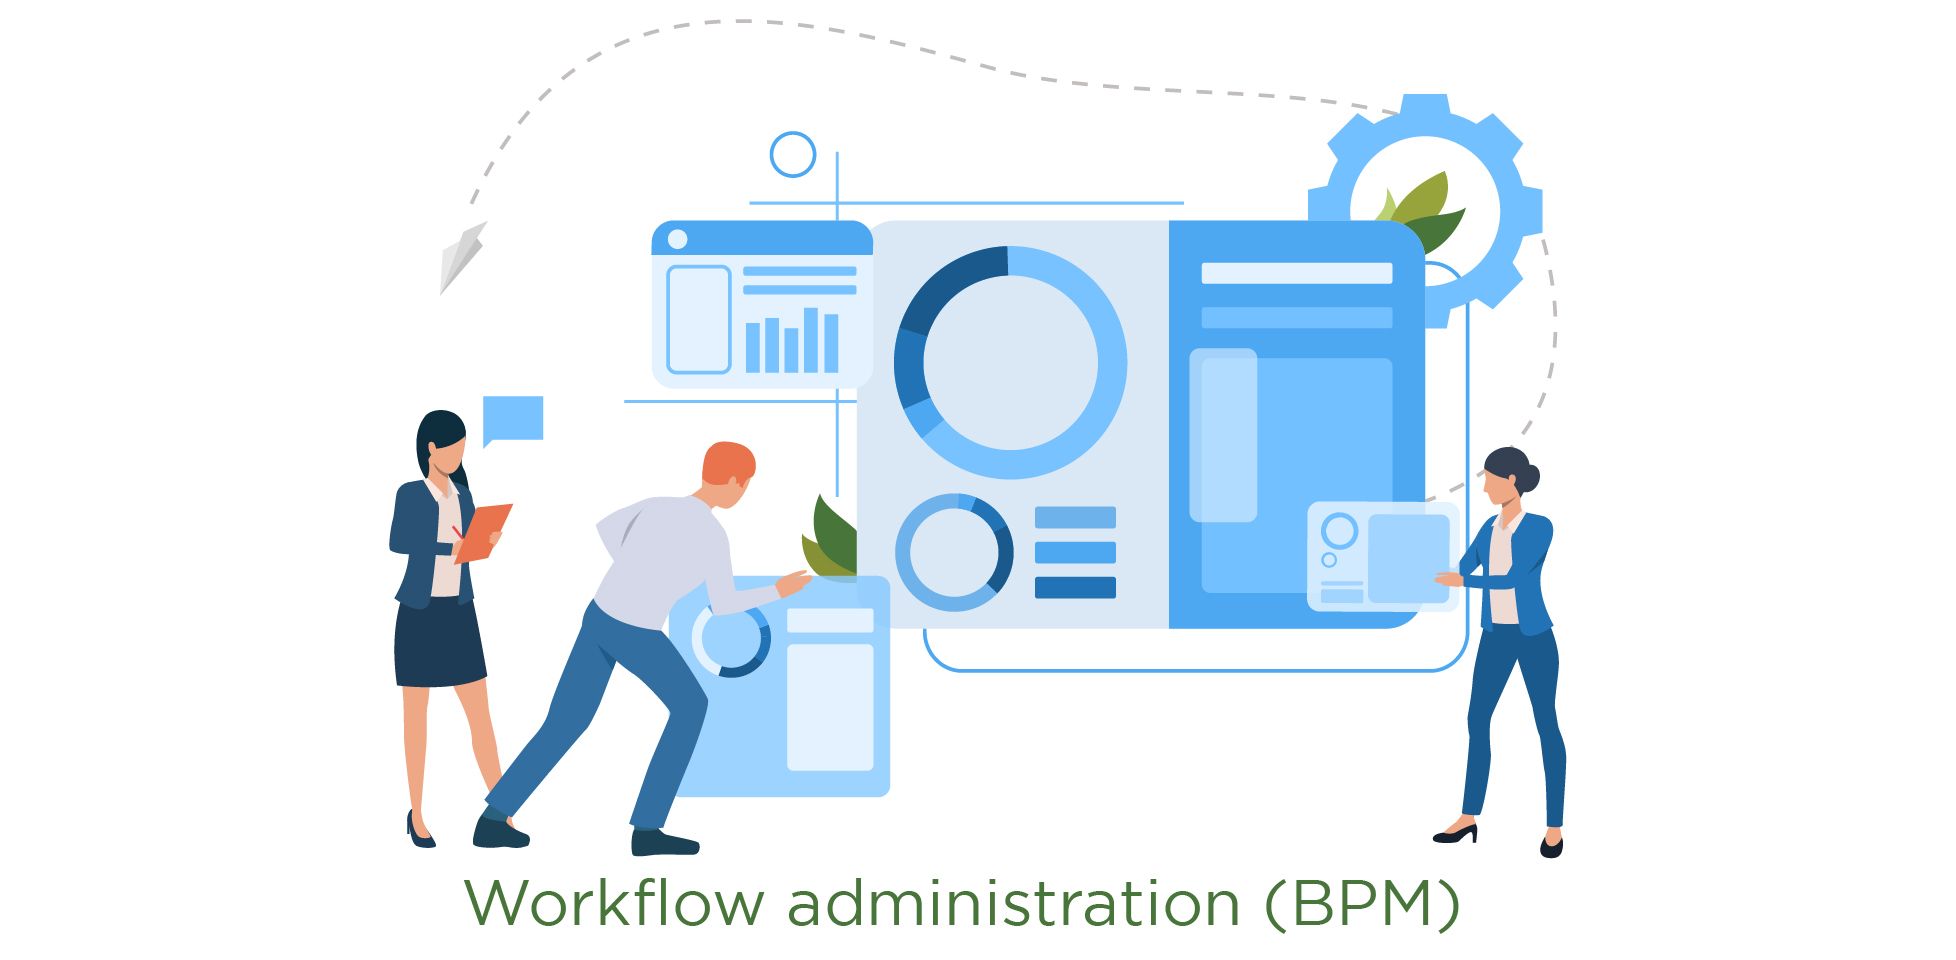 Workflow administration (BPM)